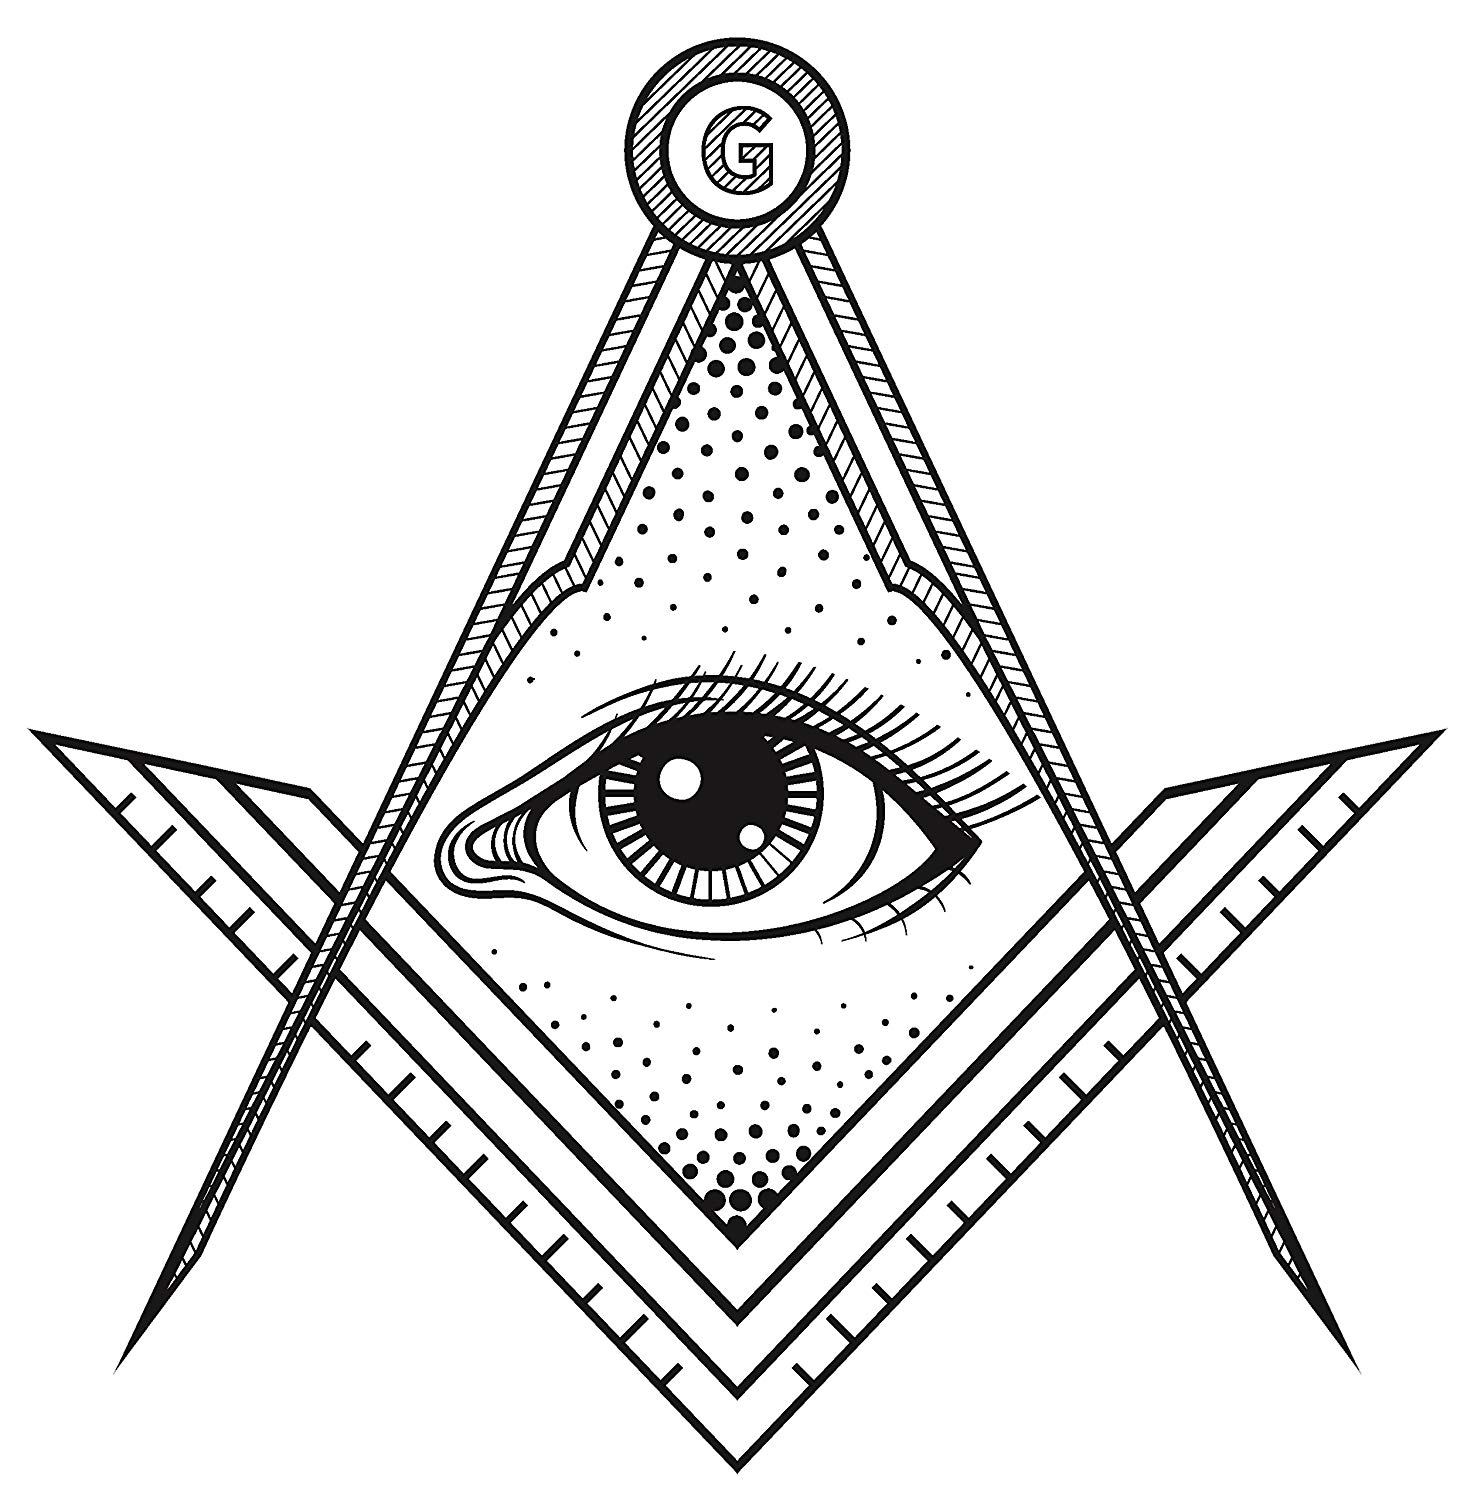 Eygptian Logo - Amazon.com: Black and White Geometric Egyptian Logo with Eye of ...